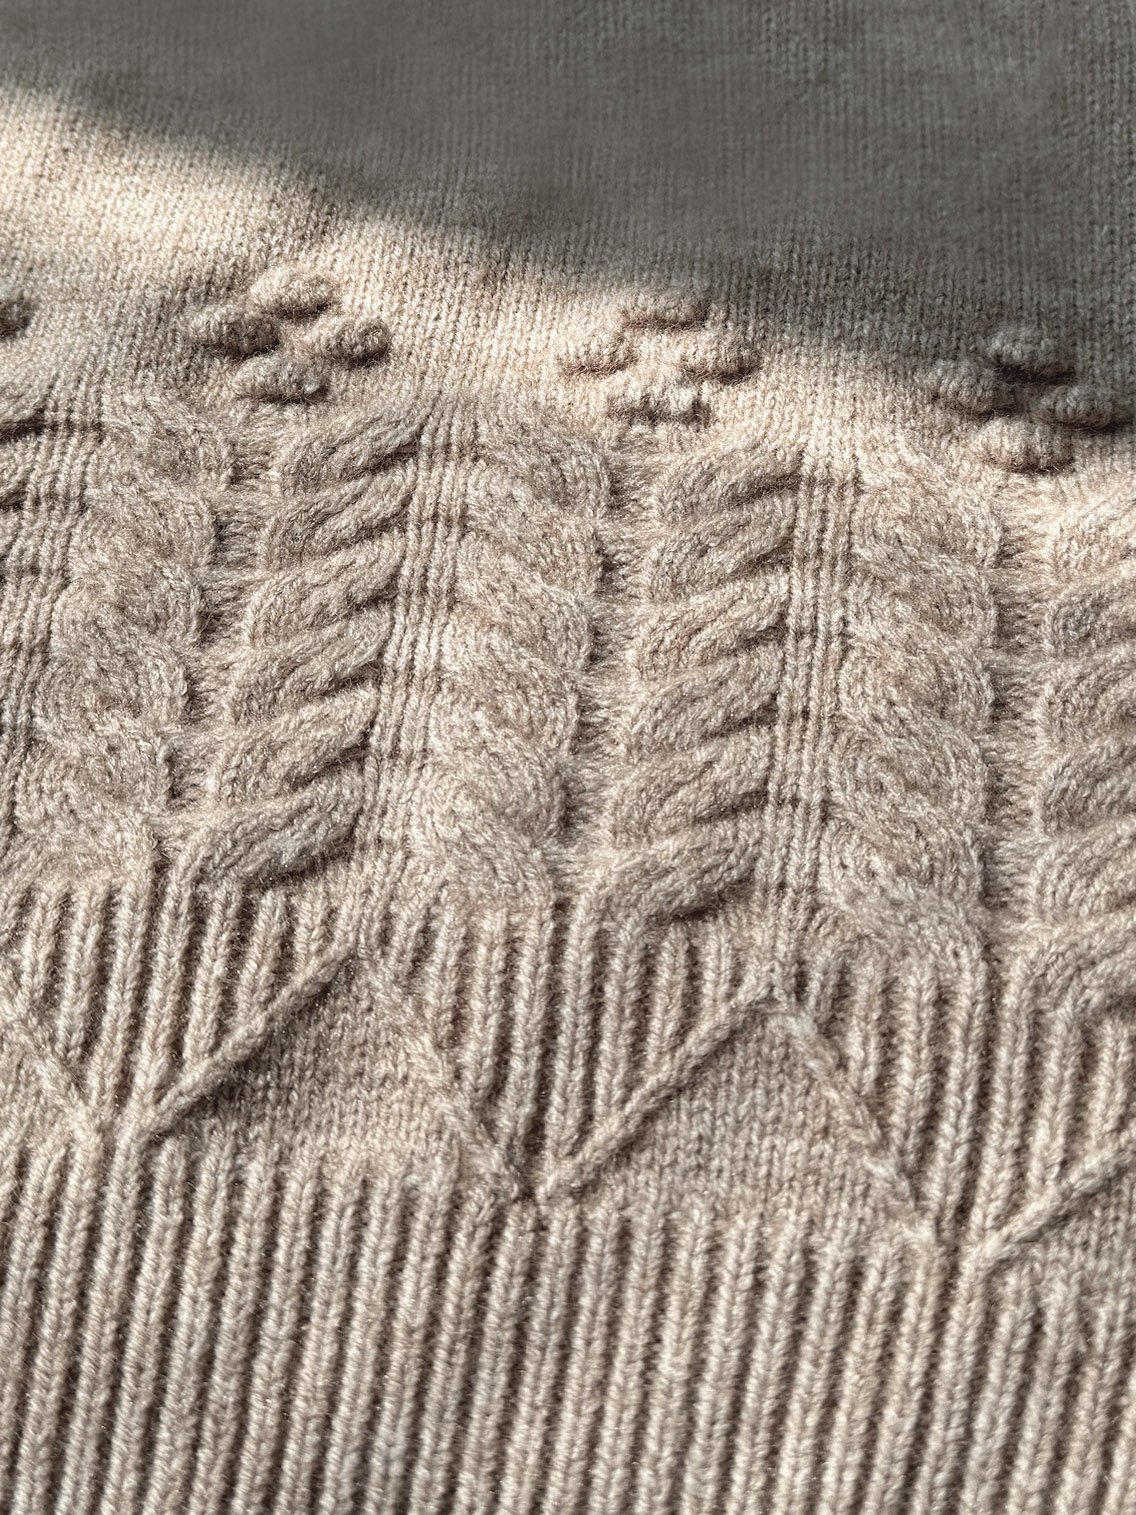 Casual Plain Wool/Knitting Crew Neck Sweater